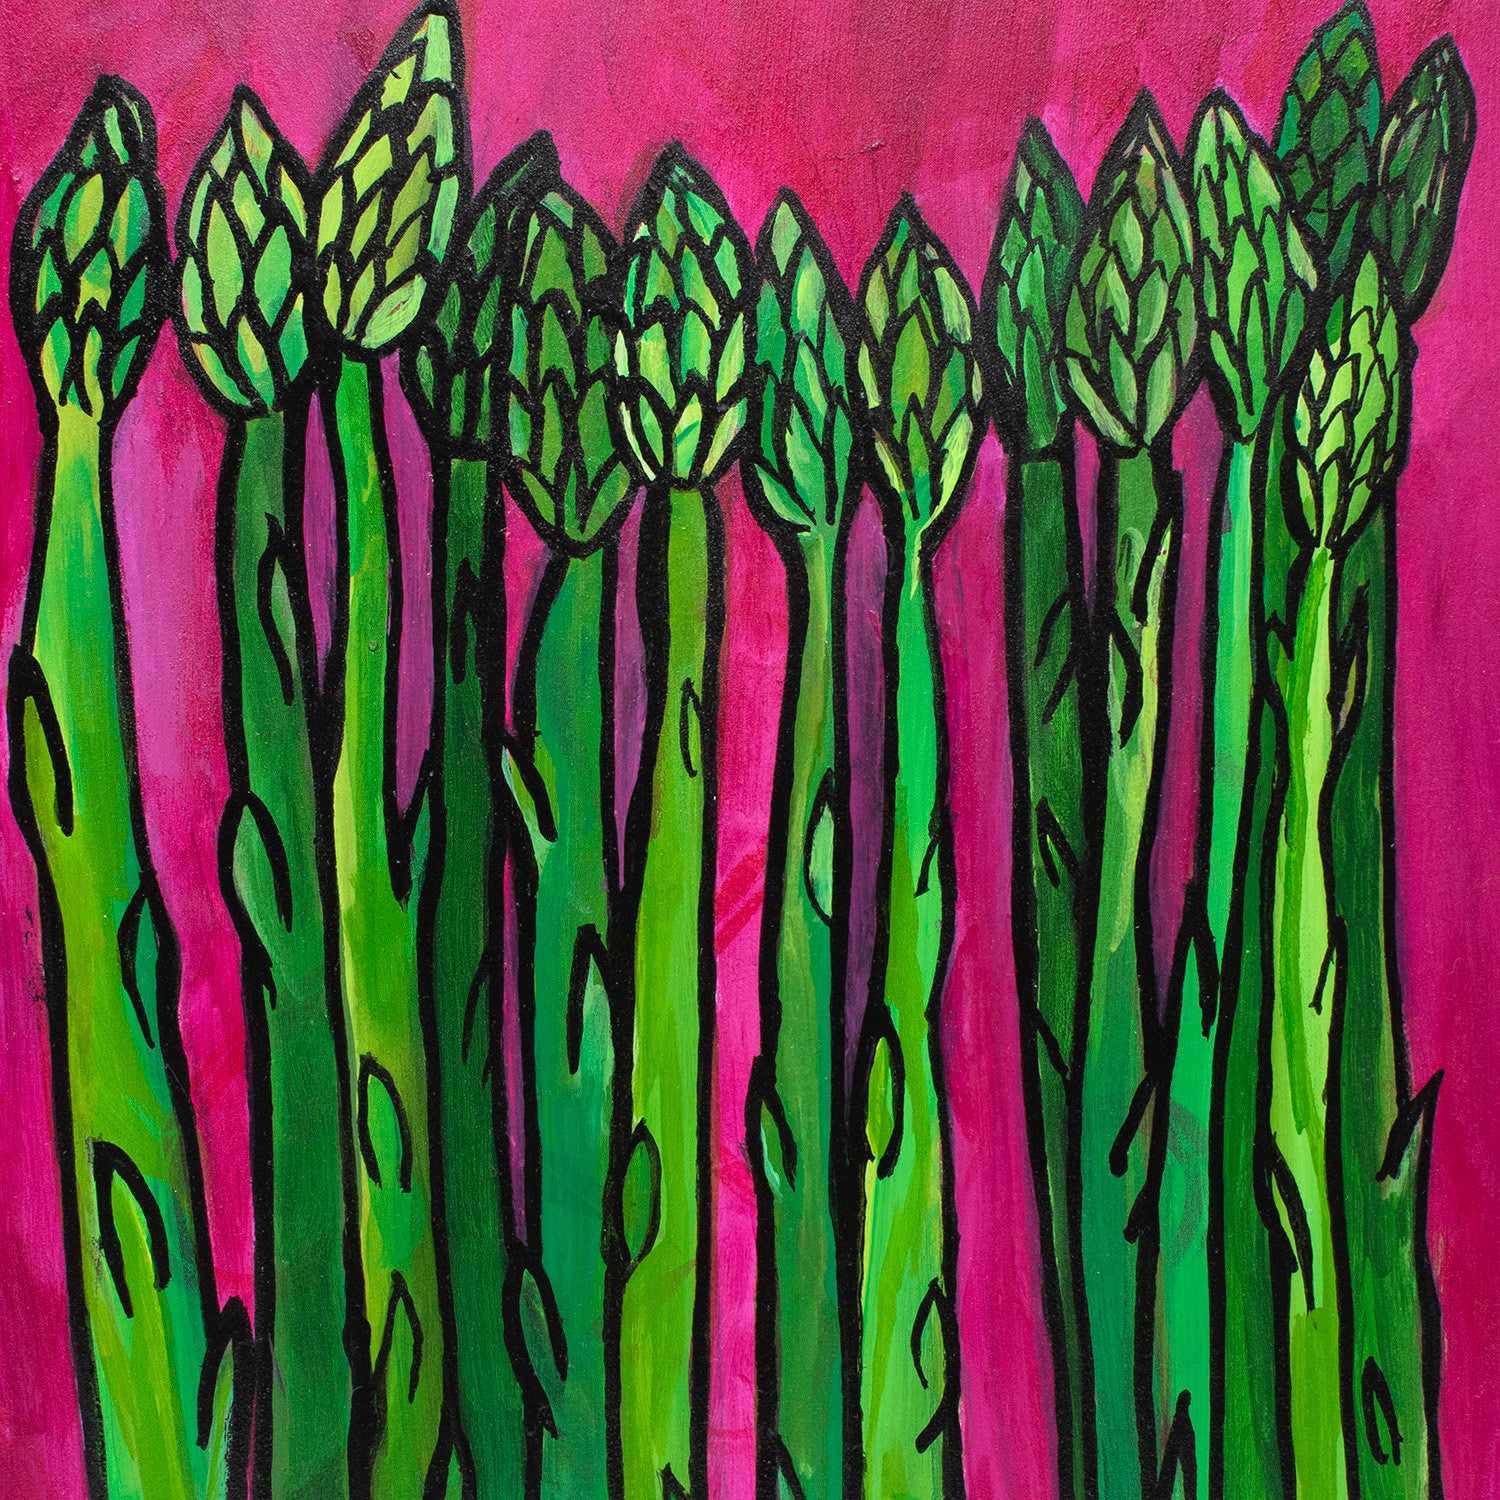 Asparagus Painting - Green Vegetable Art 